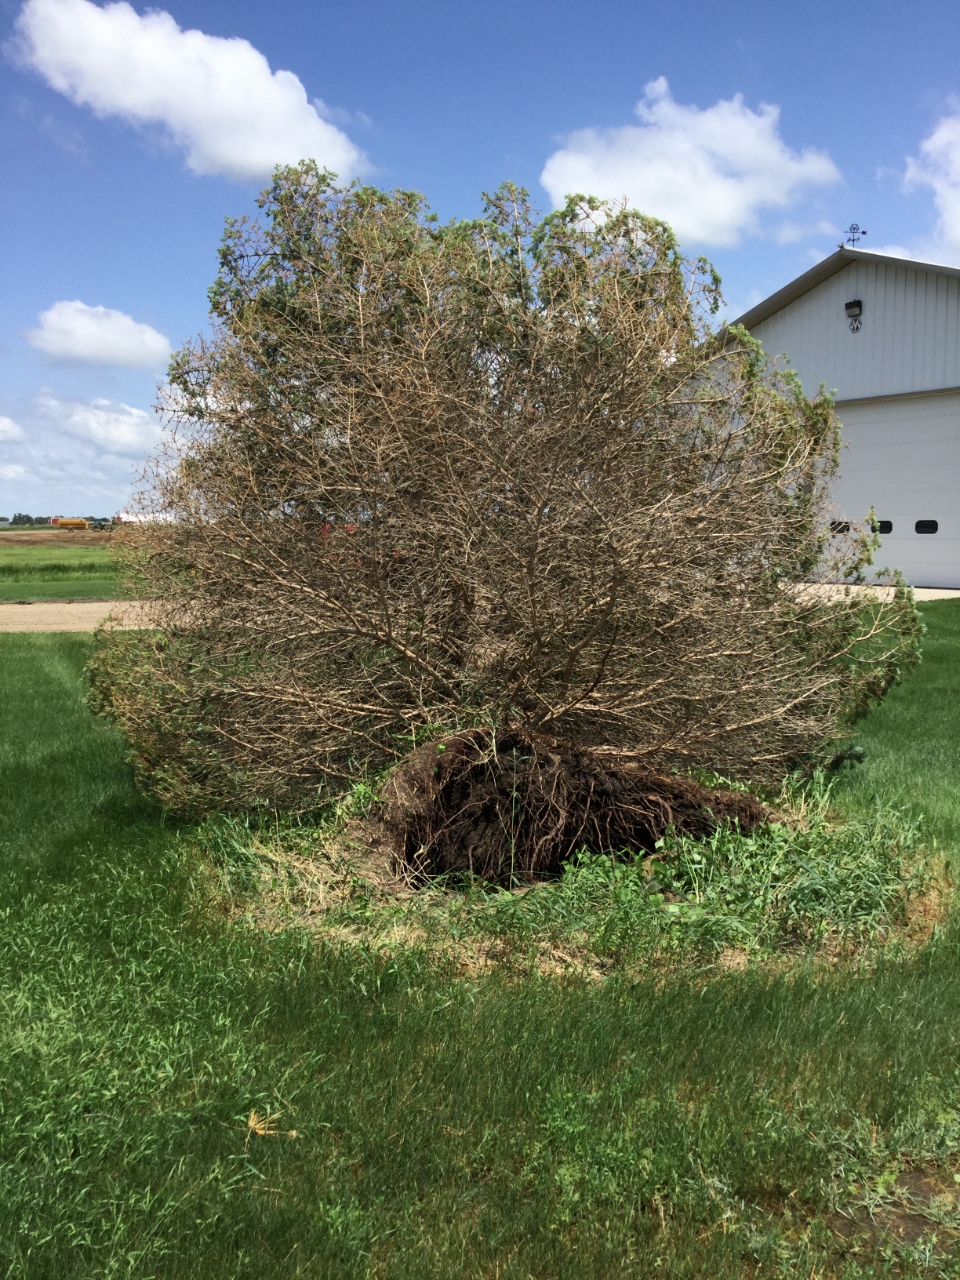 Tree snapped 2 miles west of Westport, SD (Kristi Burns)